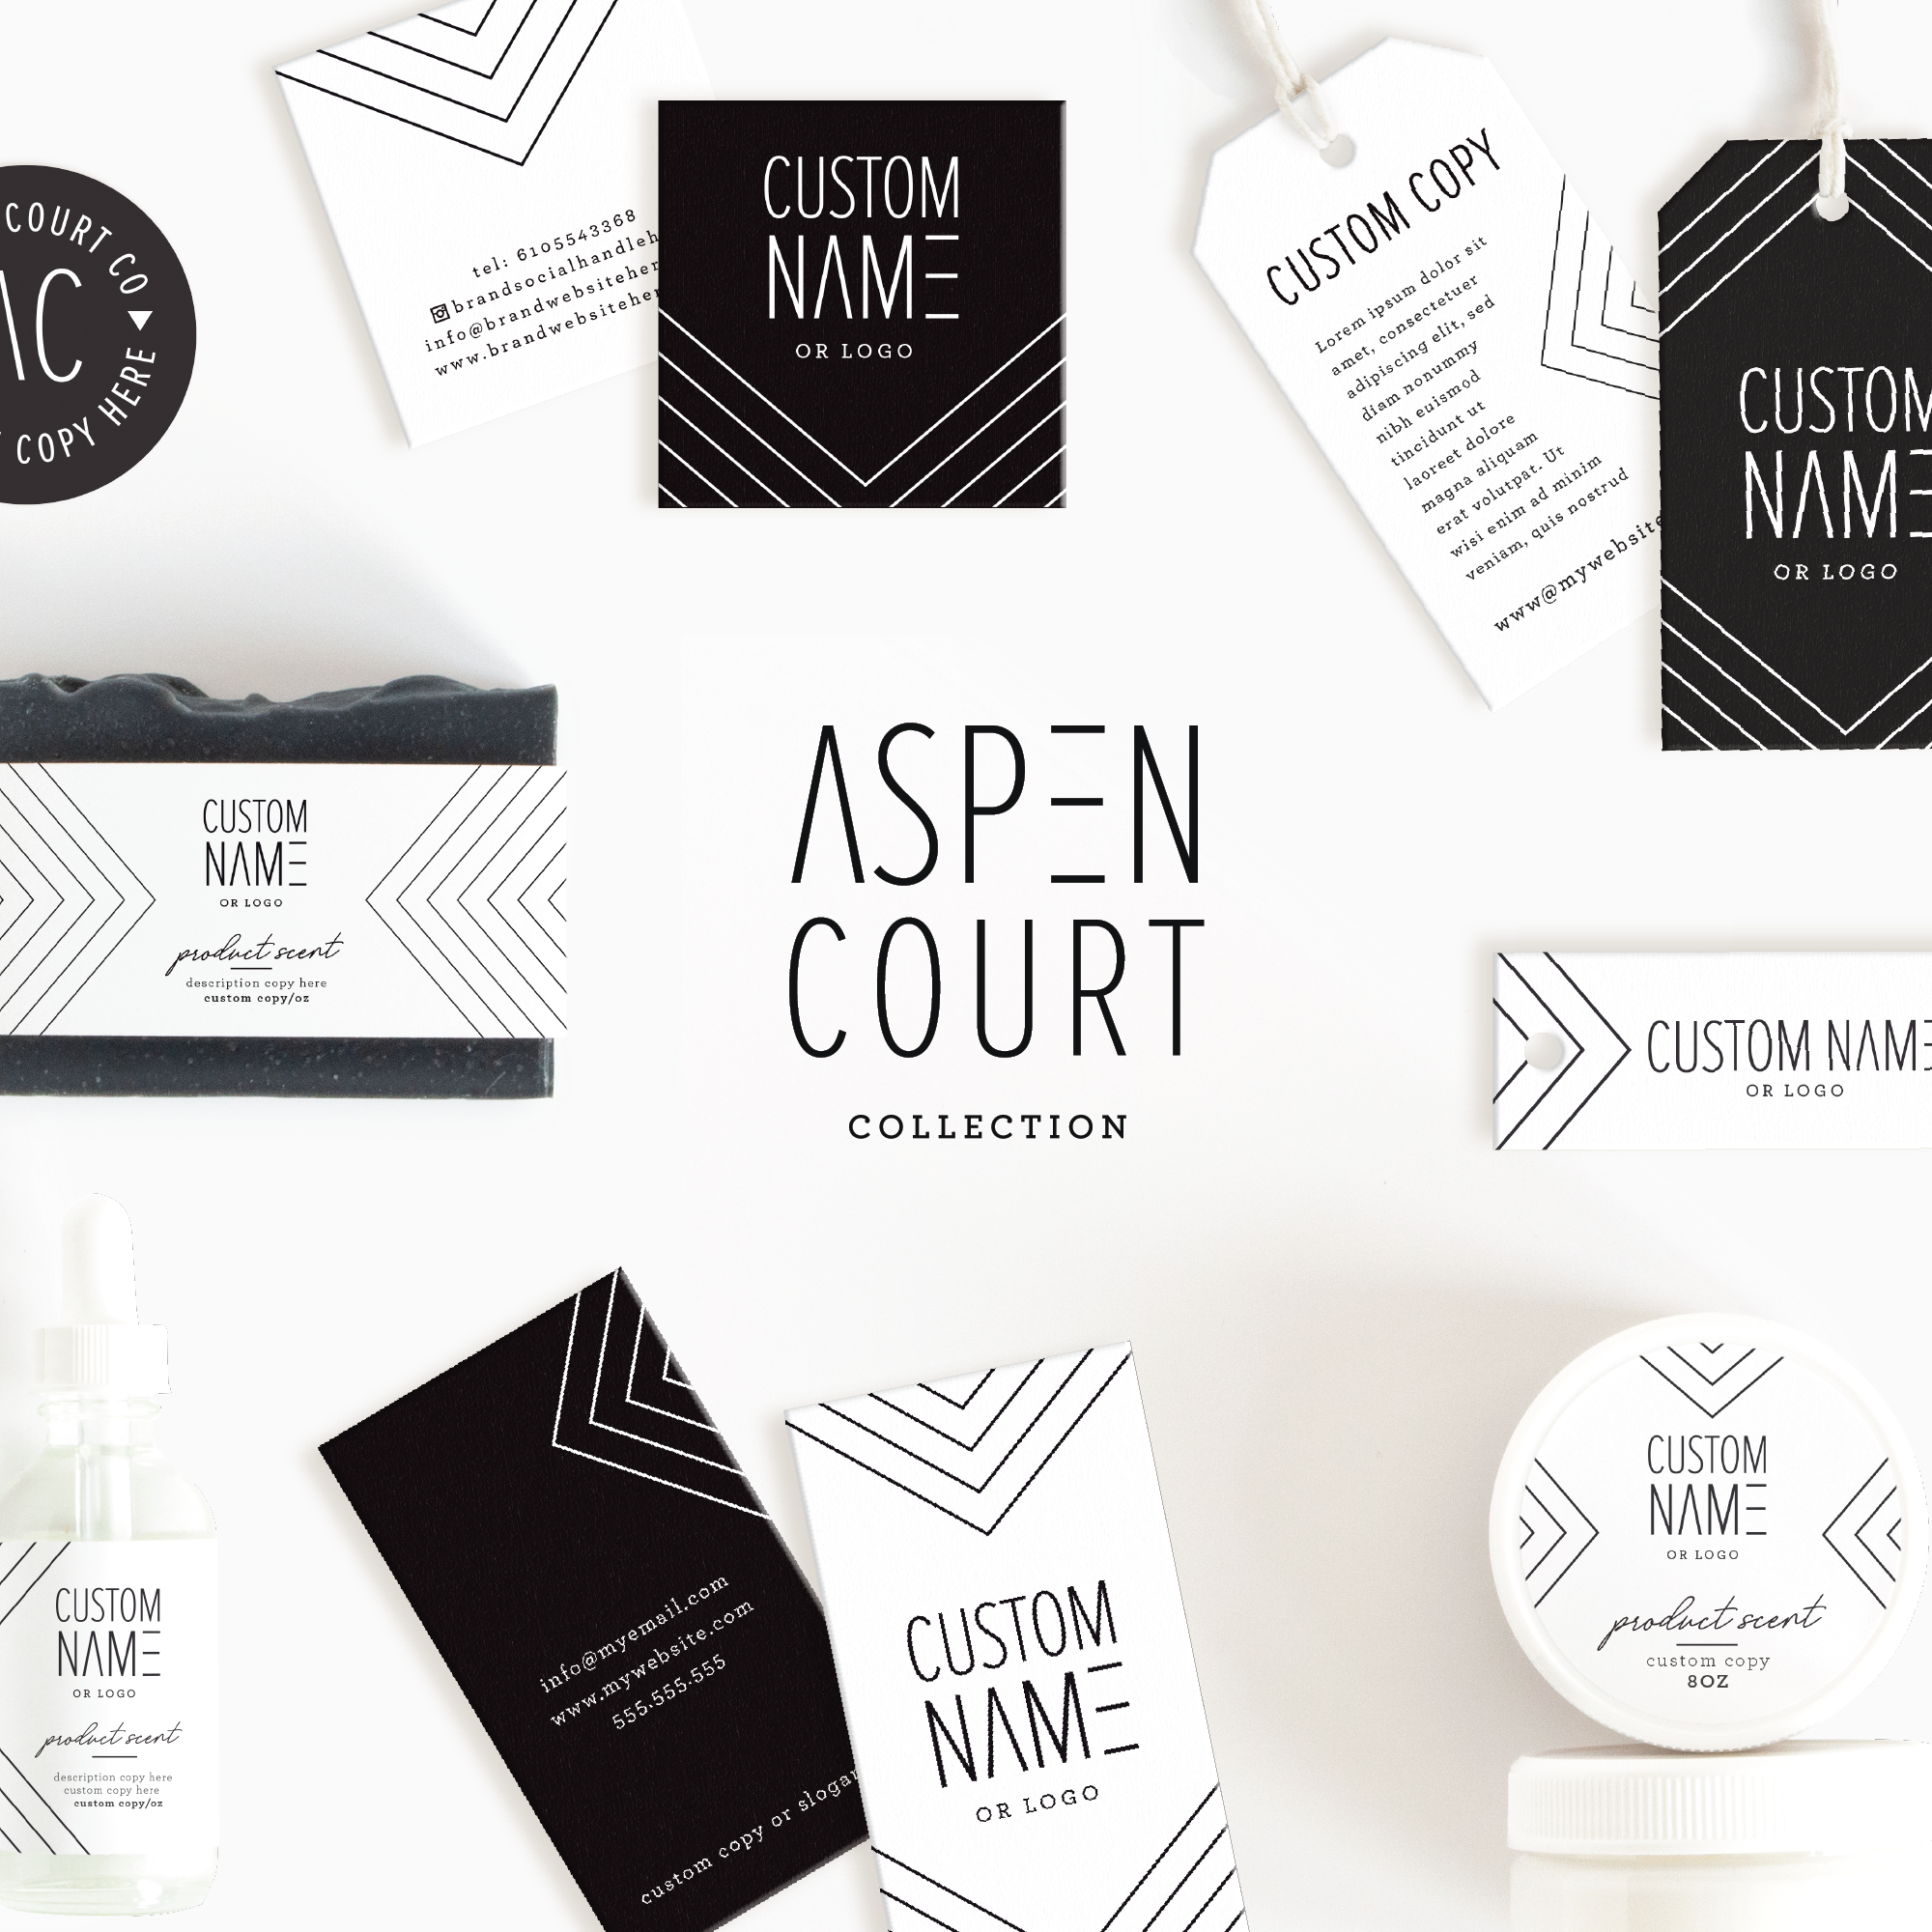 Aspen Court Packaging Sleeve